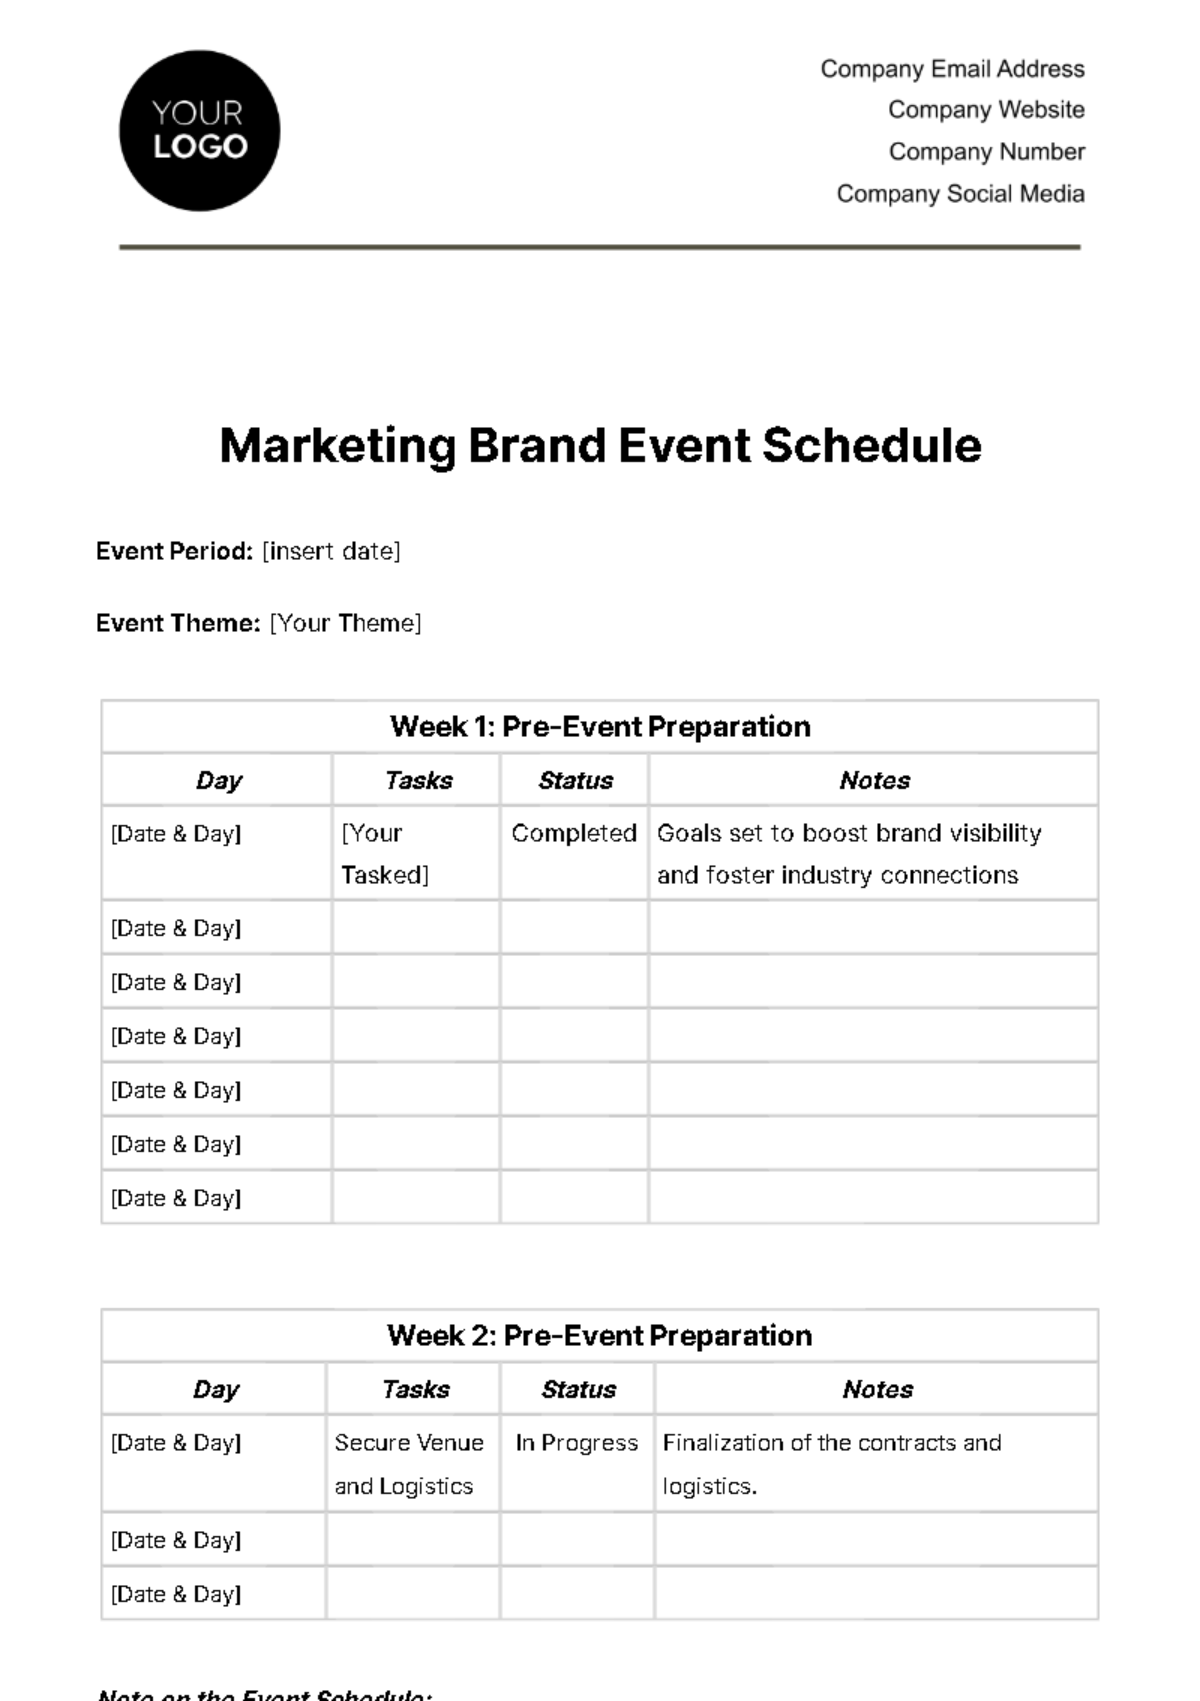 Free Marketing Brand Event Schedule Template